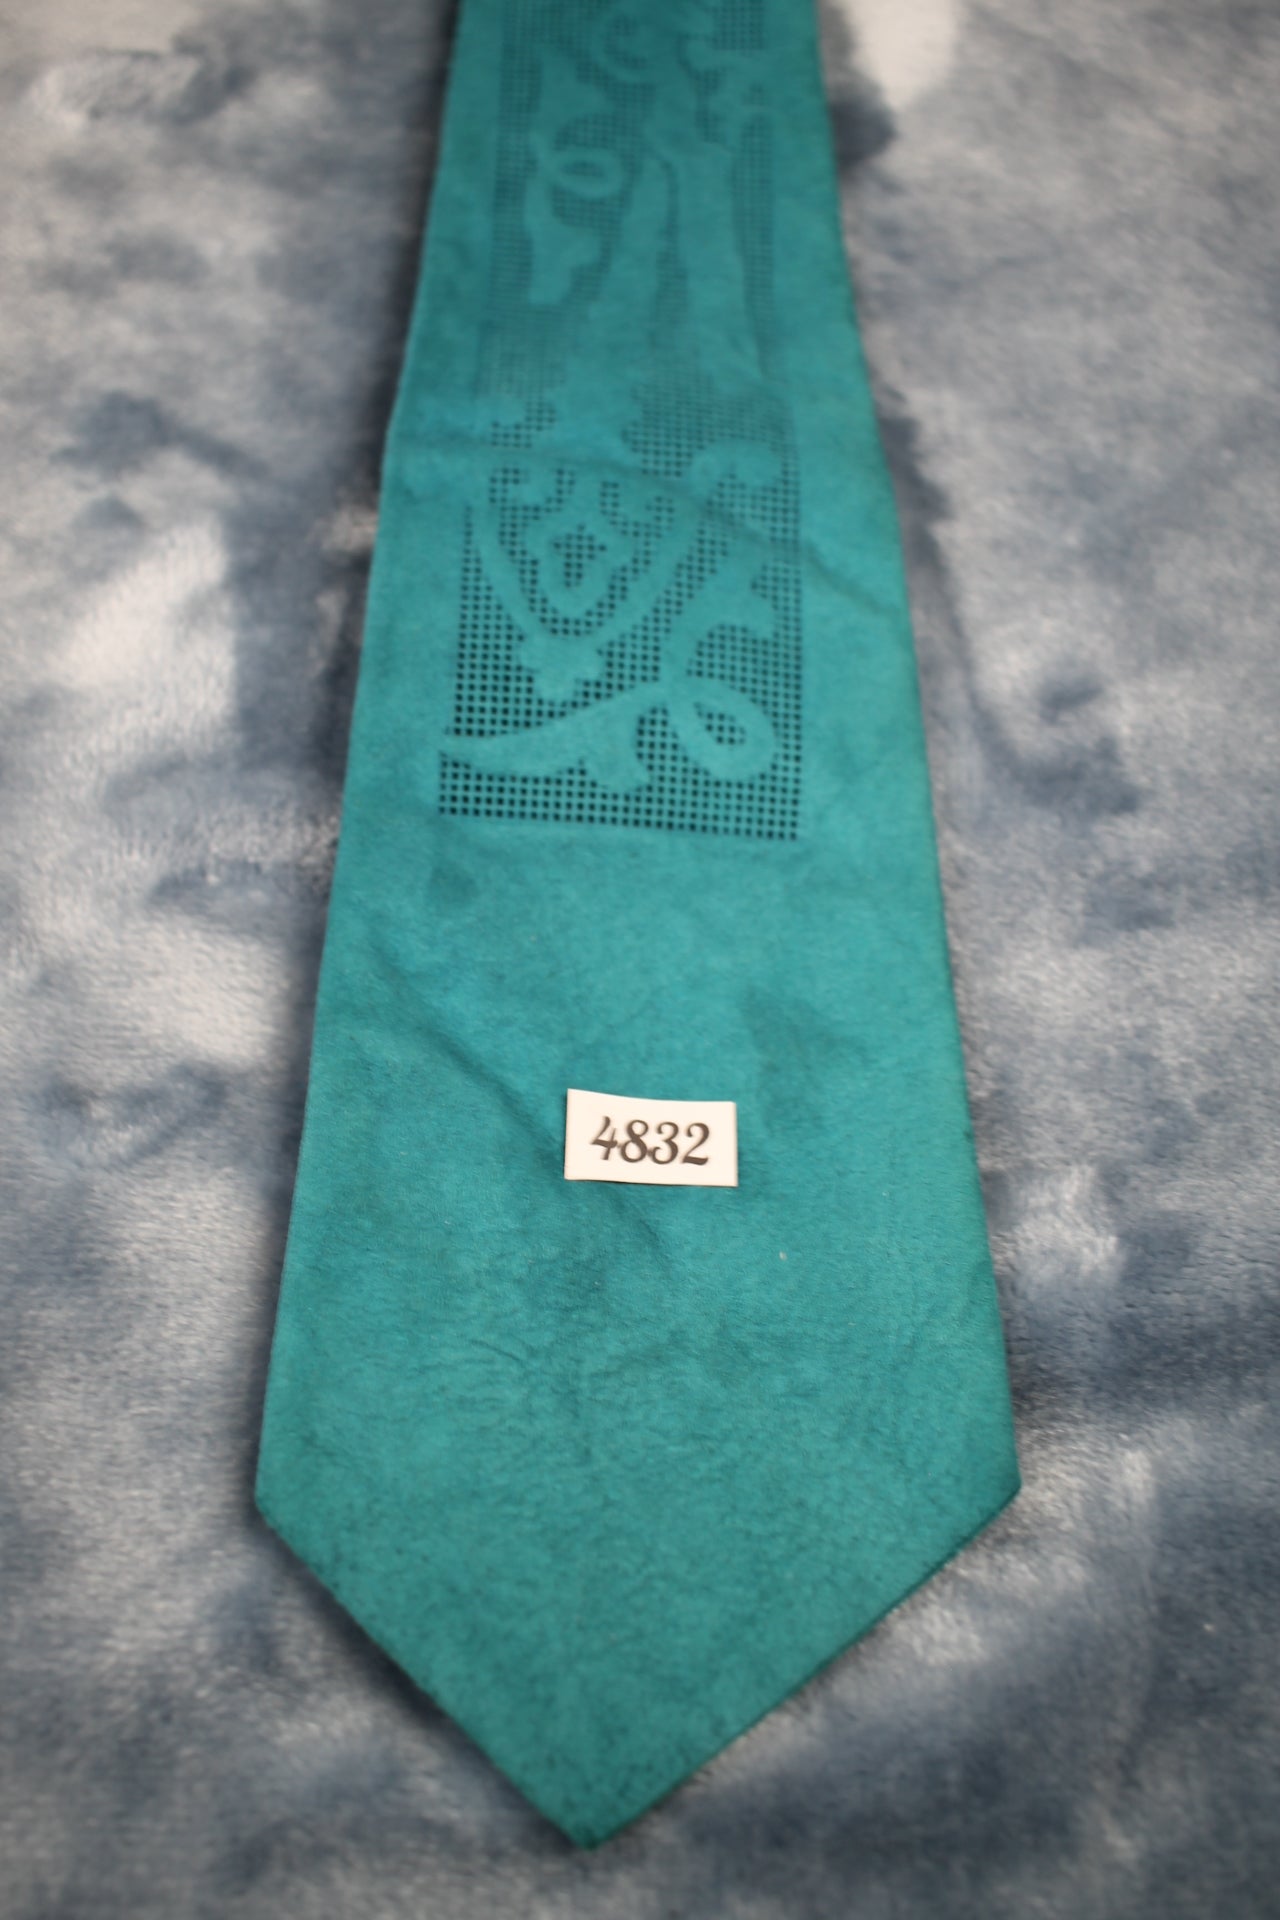 Vintage 1940s/50s suede cut turquoise swing tie